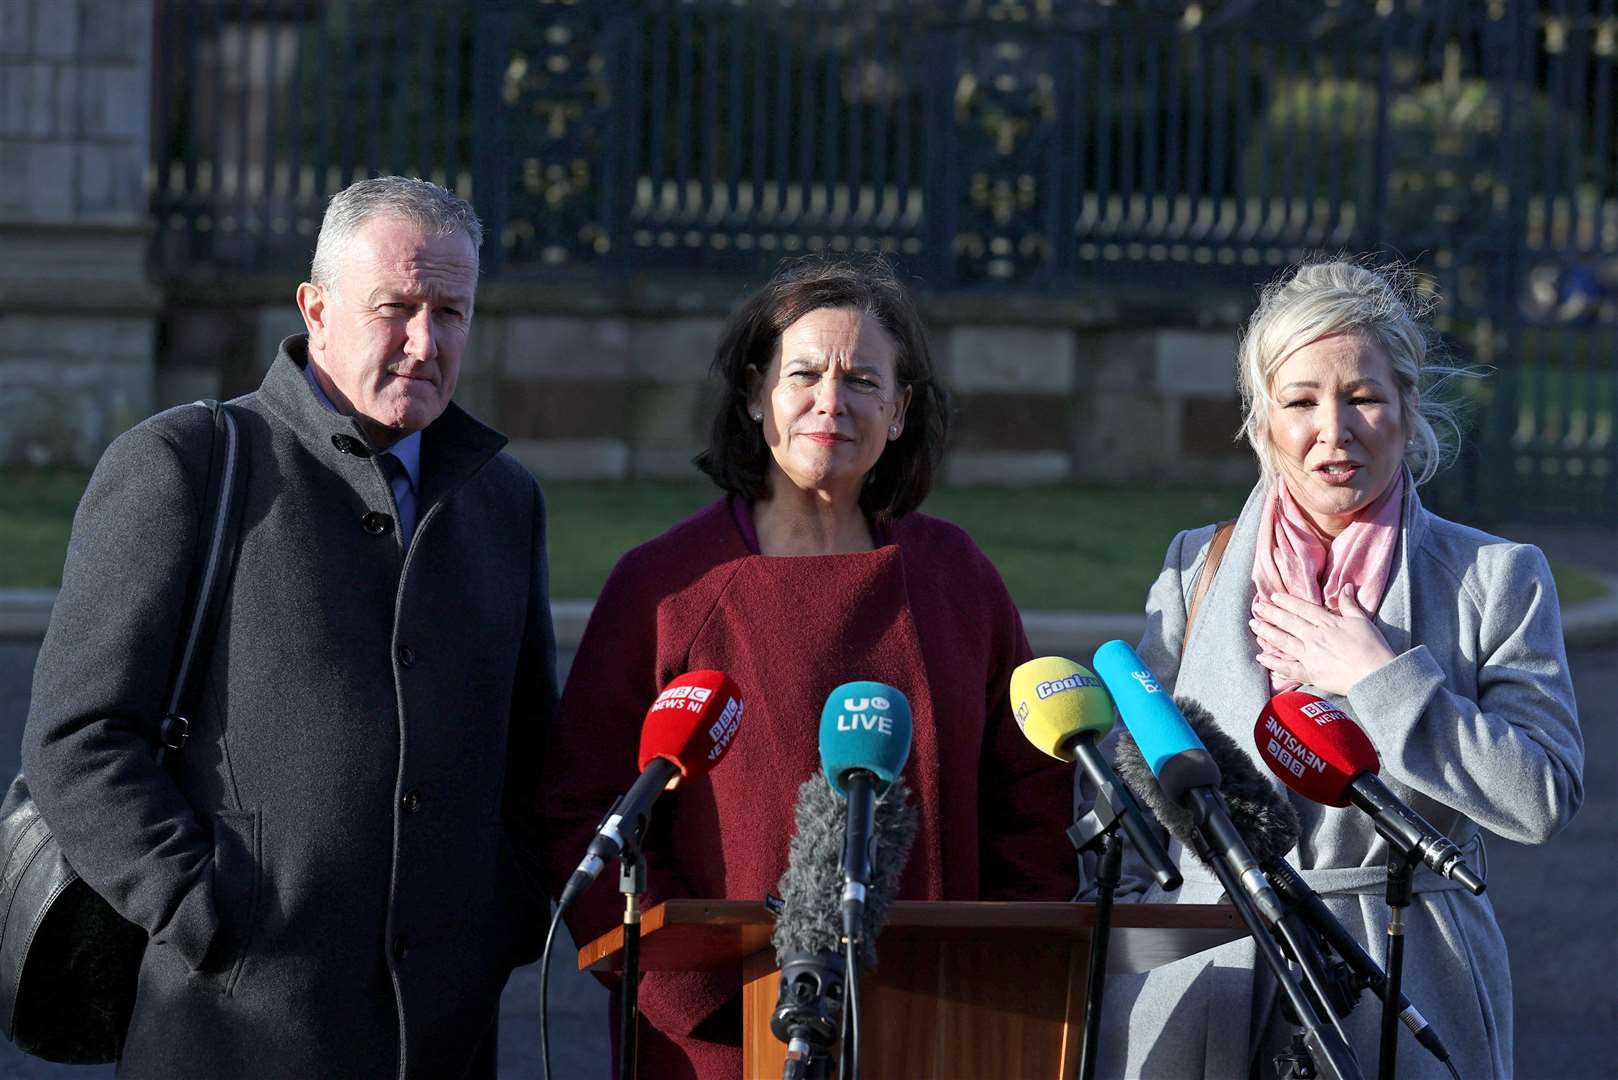 Sinn Fein representatives (left to right) MLA Conor Murphy, president Mary Lou McDonald and vice-president Michelle O’Neill speak to the media outside Hillsborough Castle (Liam McBurney/PA)